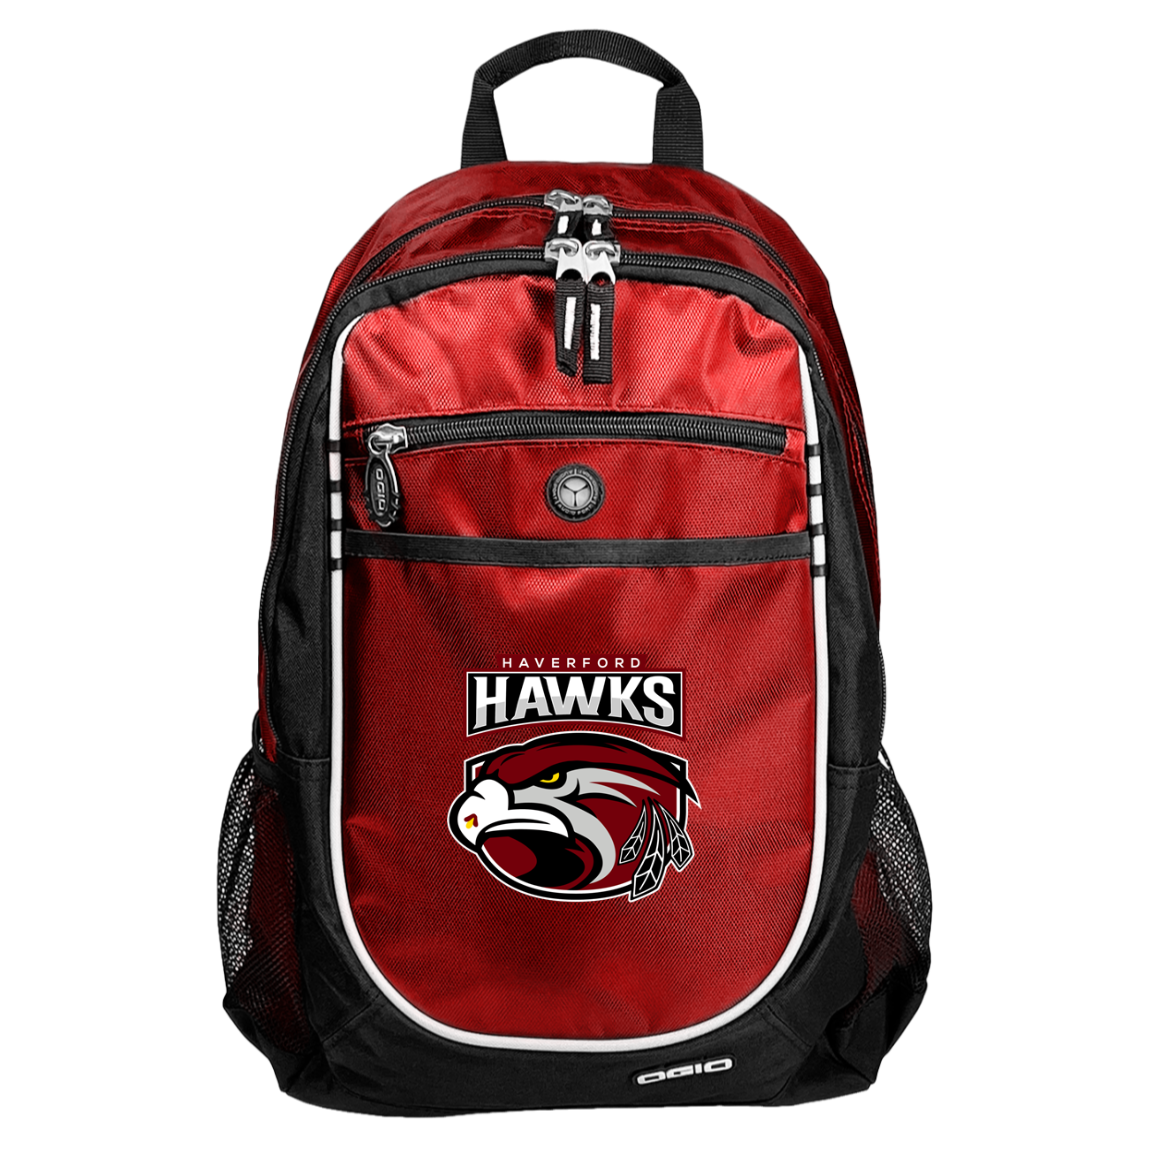 Hawks Rugged Bookbag